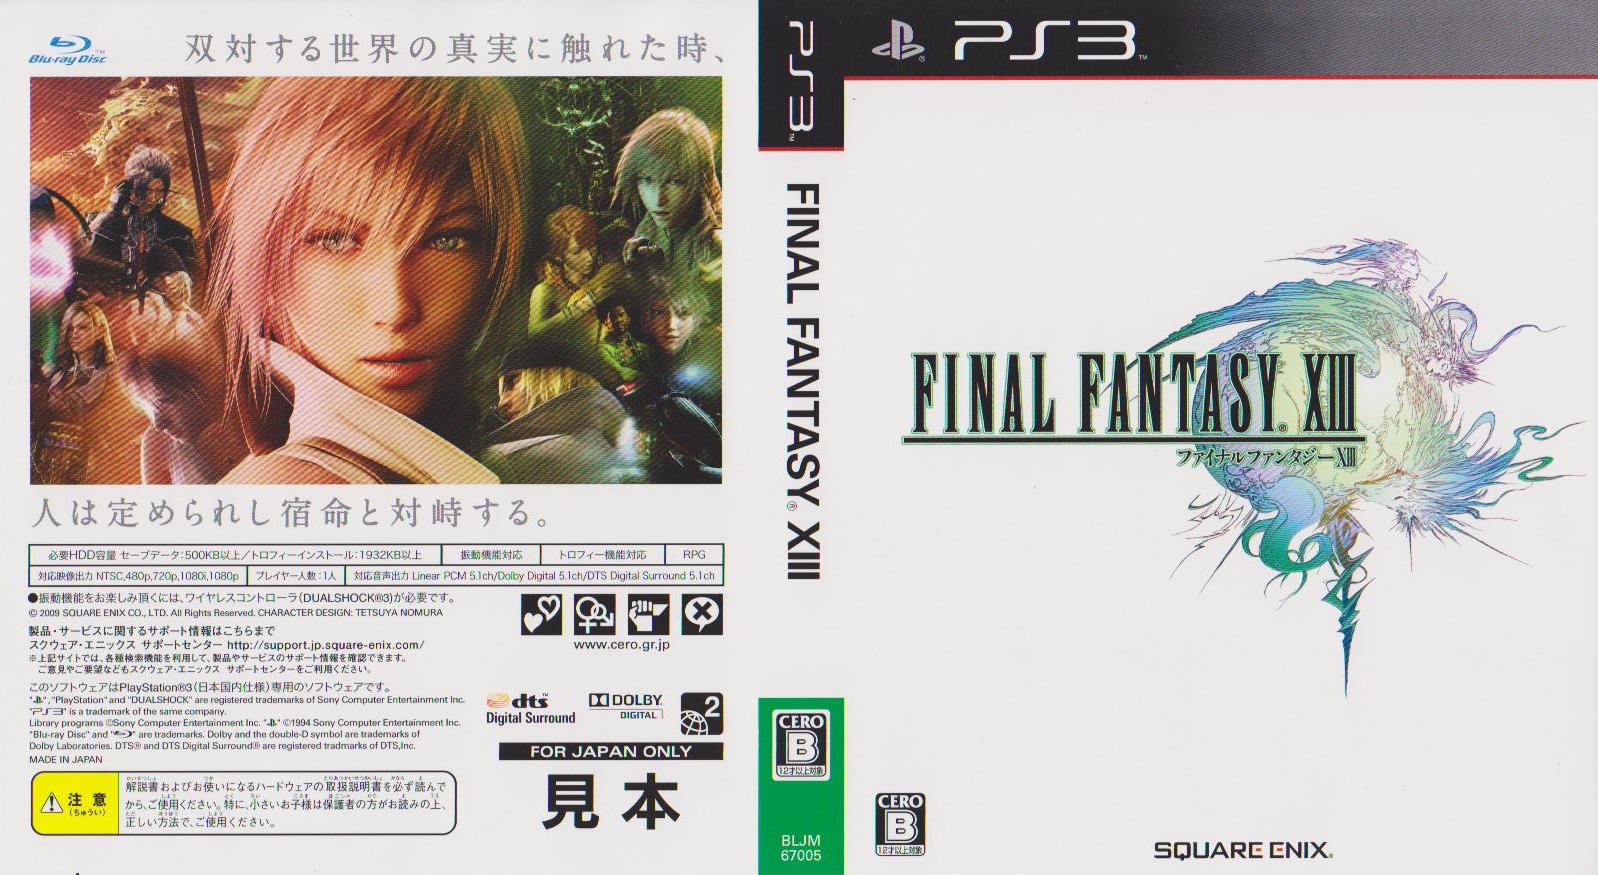 Final Fantasy Xiii のパッケージ ゲーム新情報